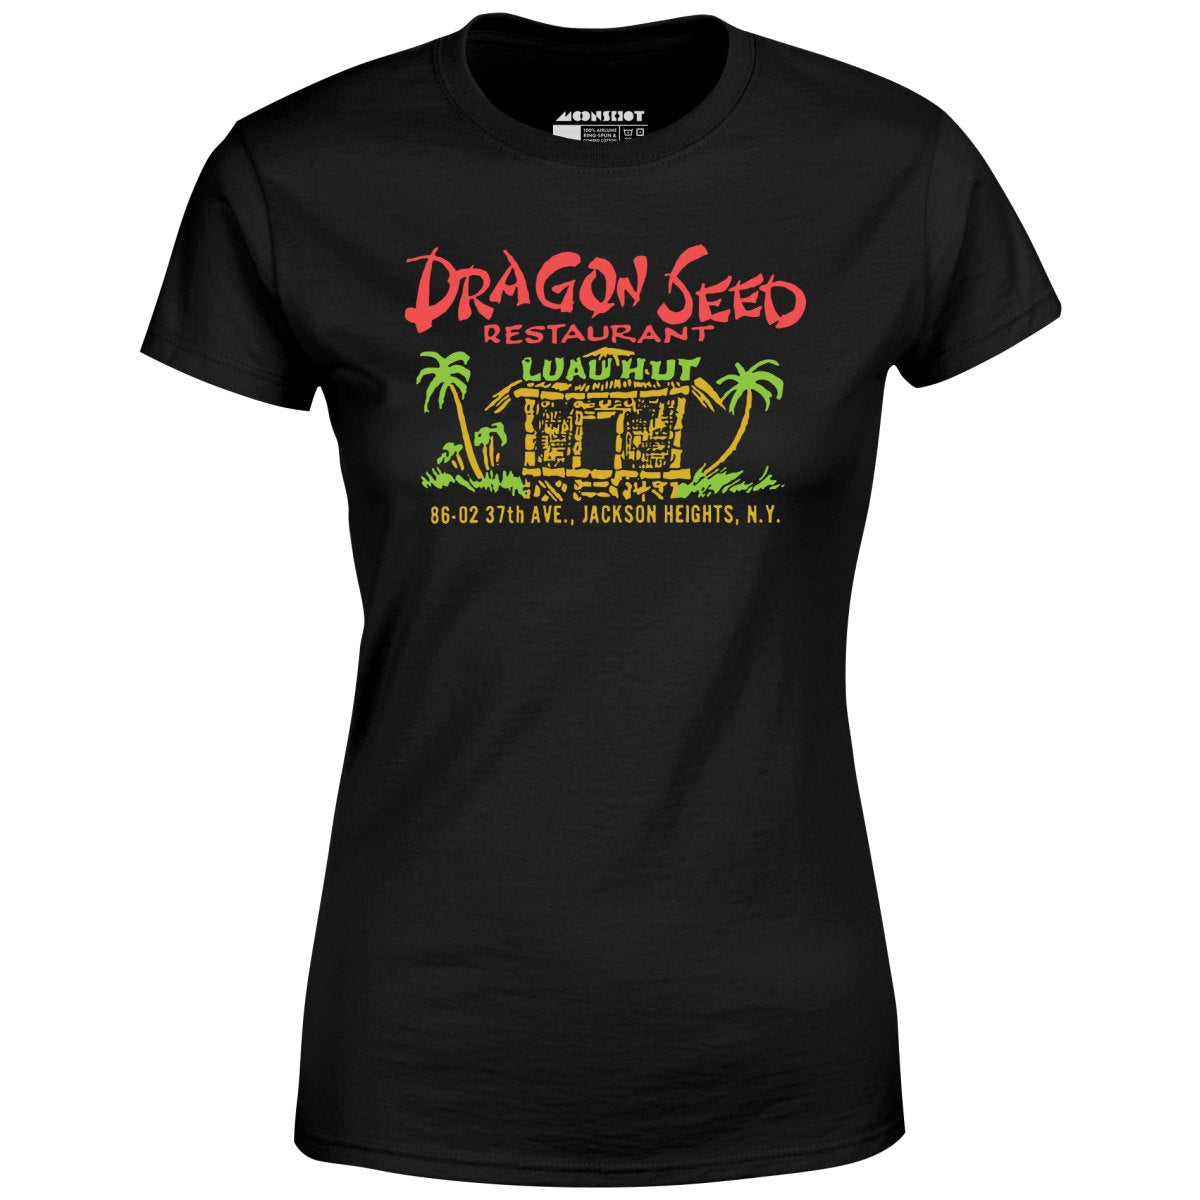 Dragon Seed Luau Hut - Jackson Heights, NY - Vintage Tiki Bar - Women's T-Shirt